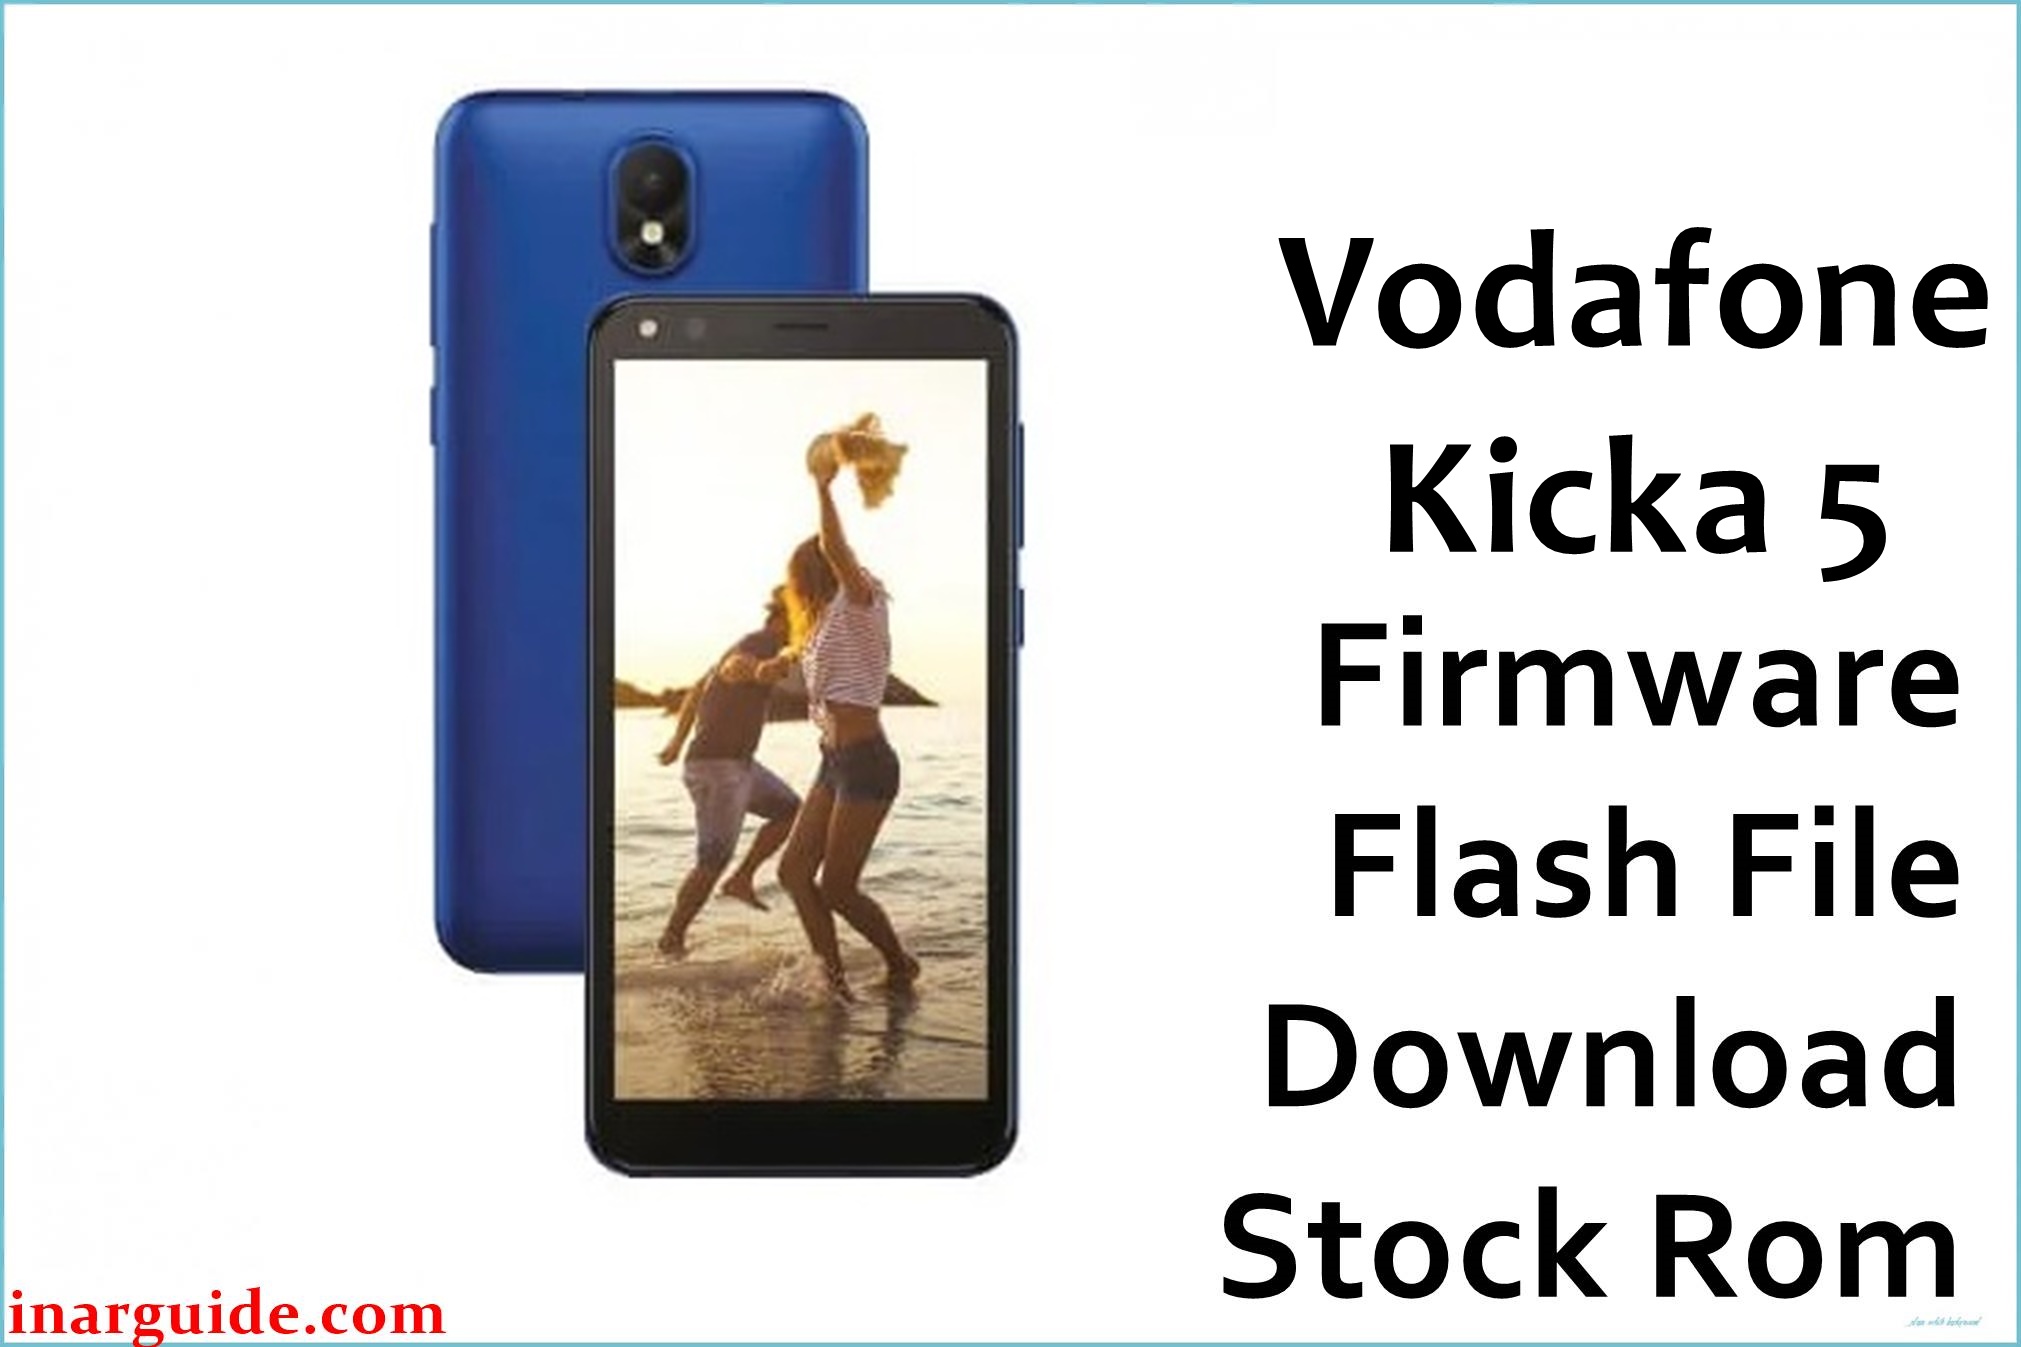 Vodafone Kicka 5